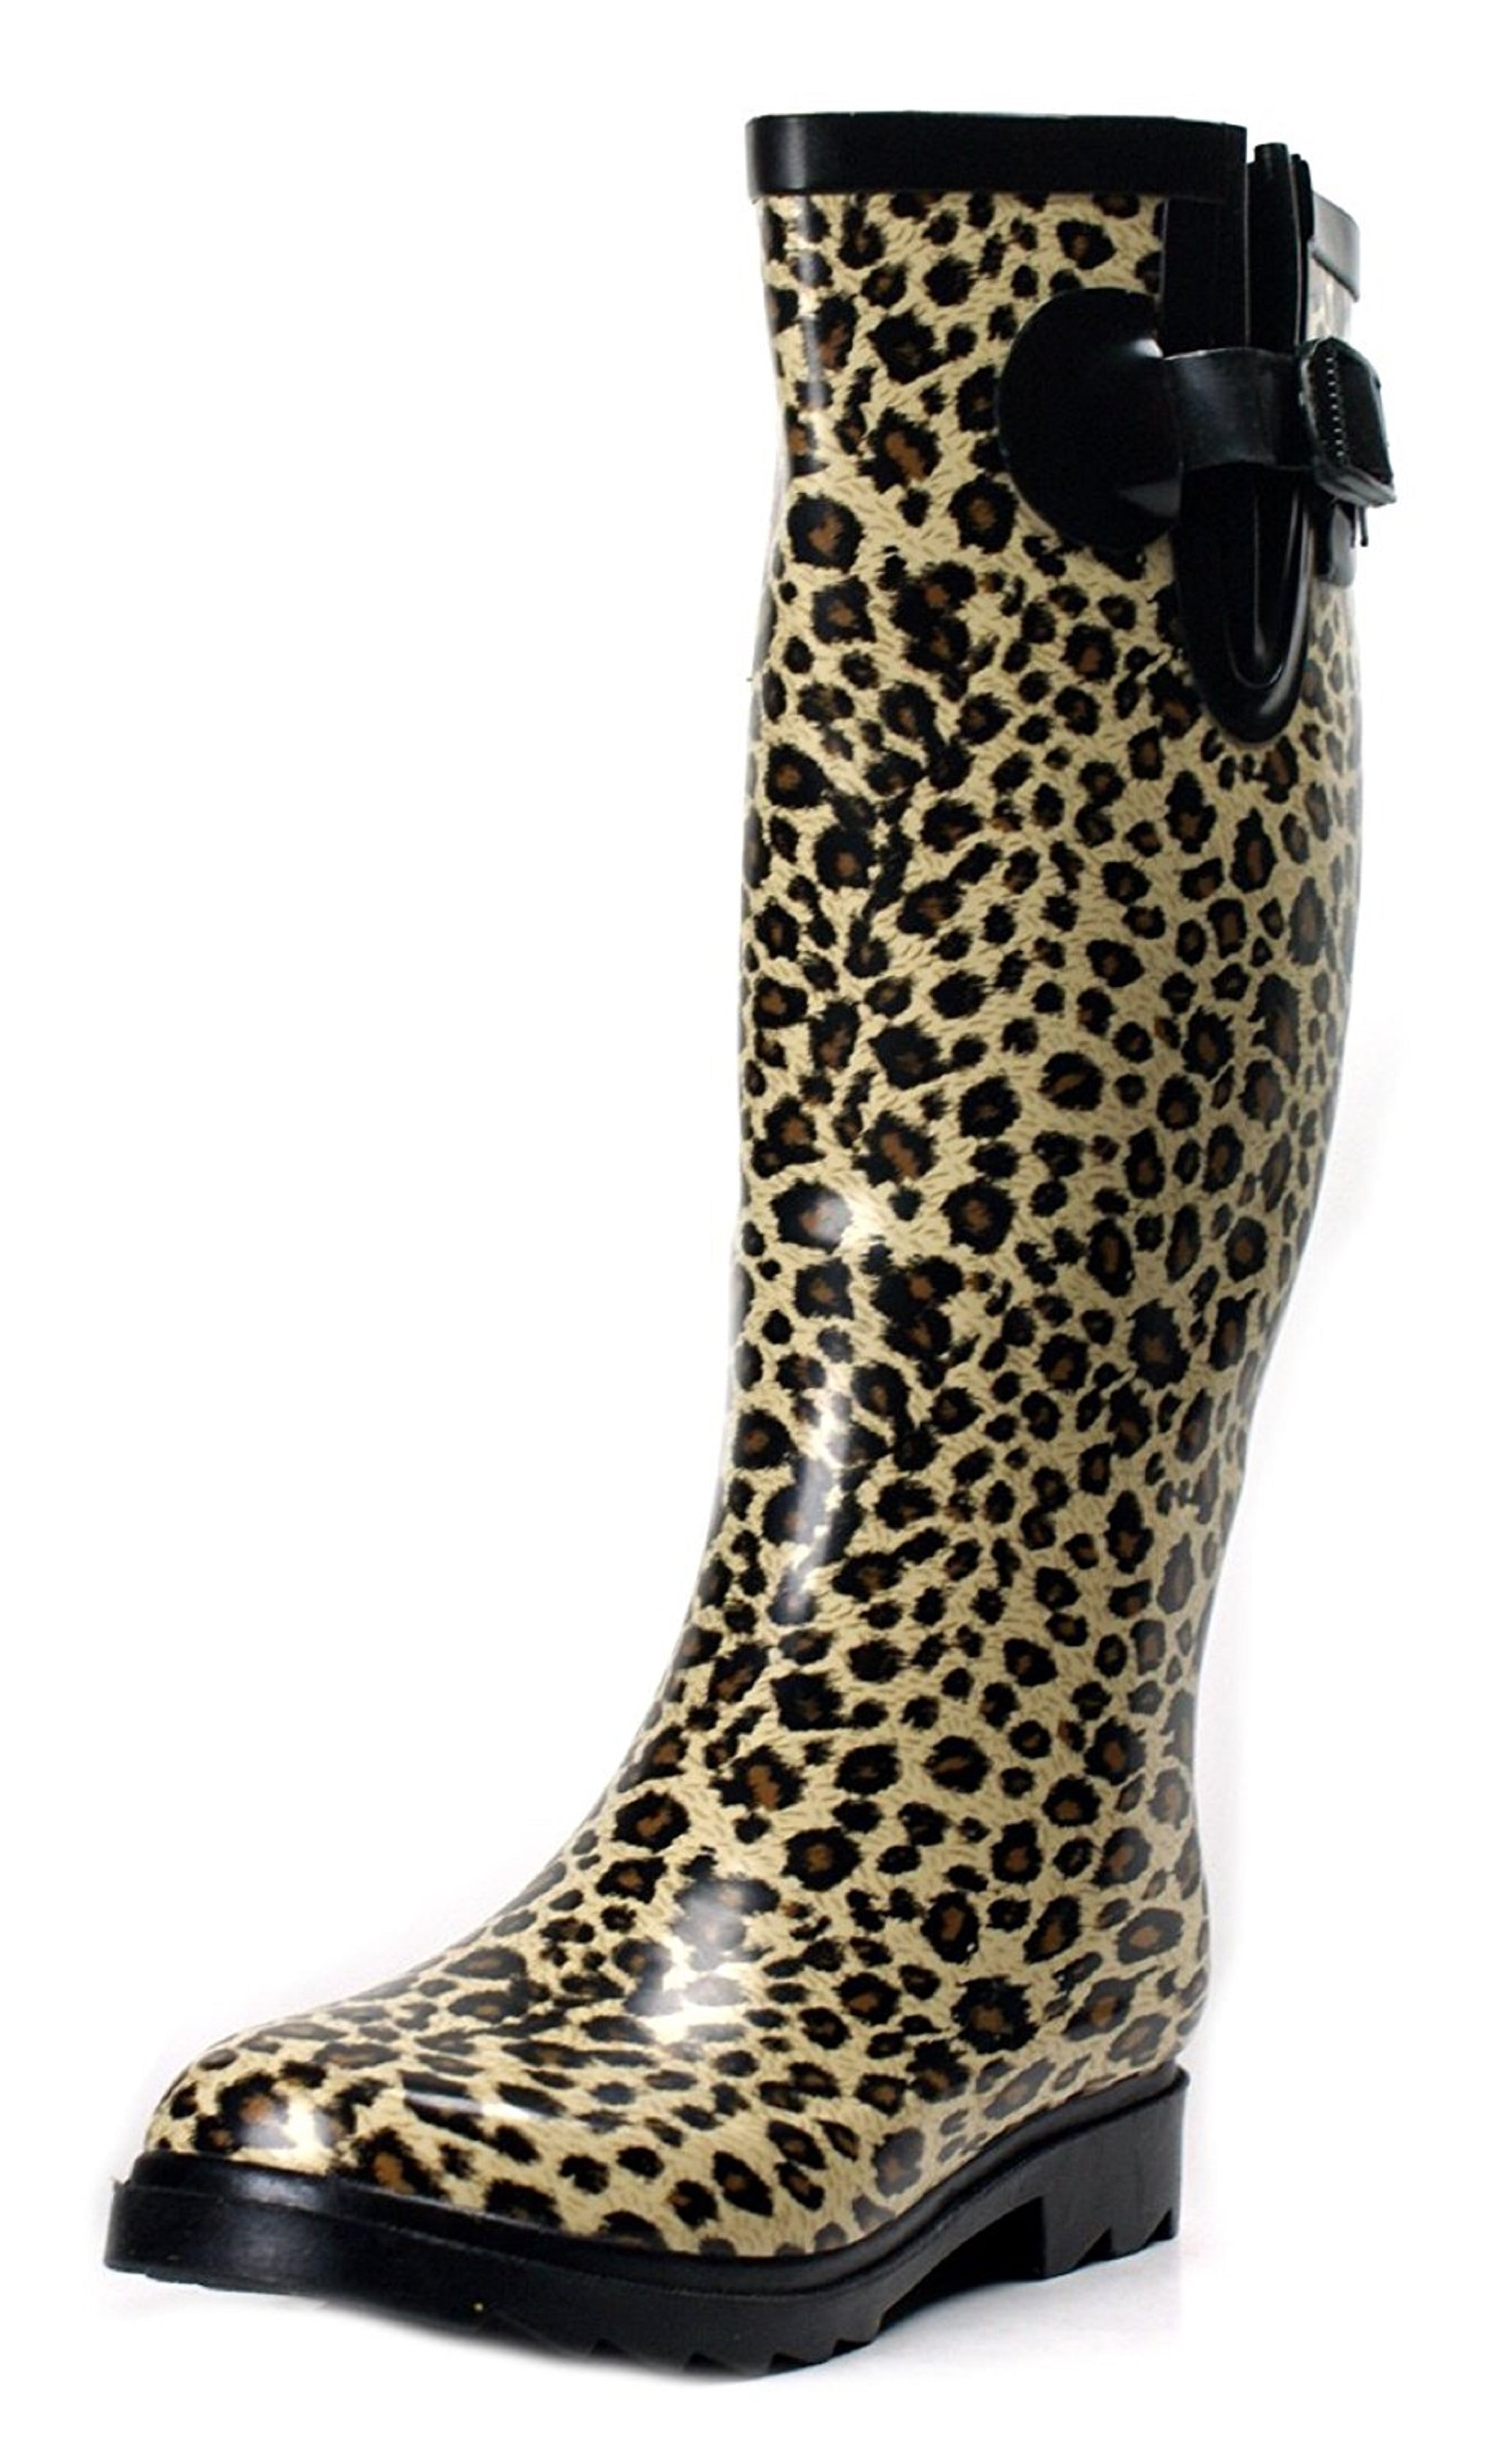 OwnShoe Womens Mid Calf Leopard Print 